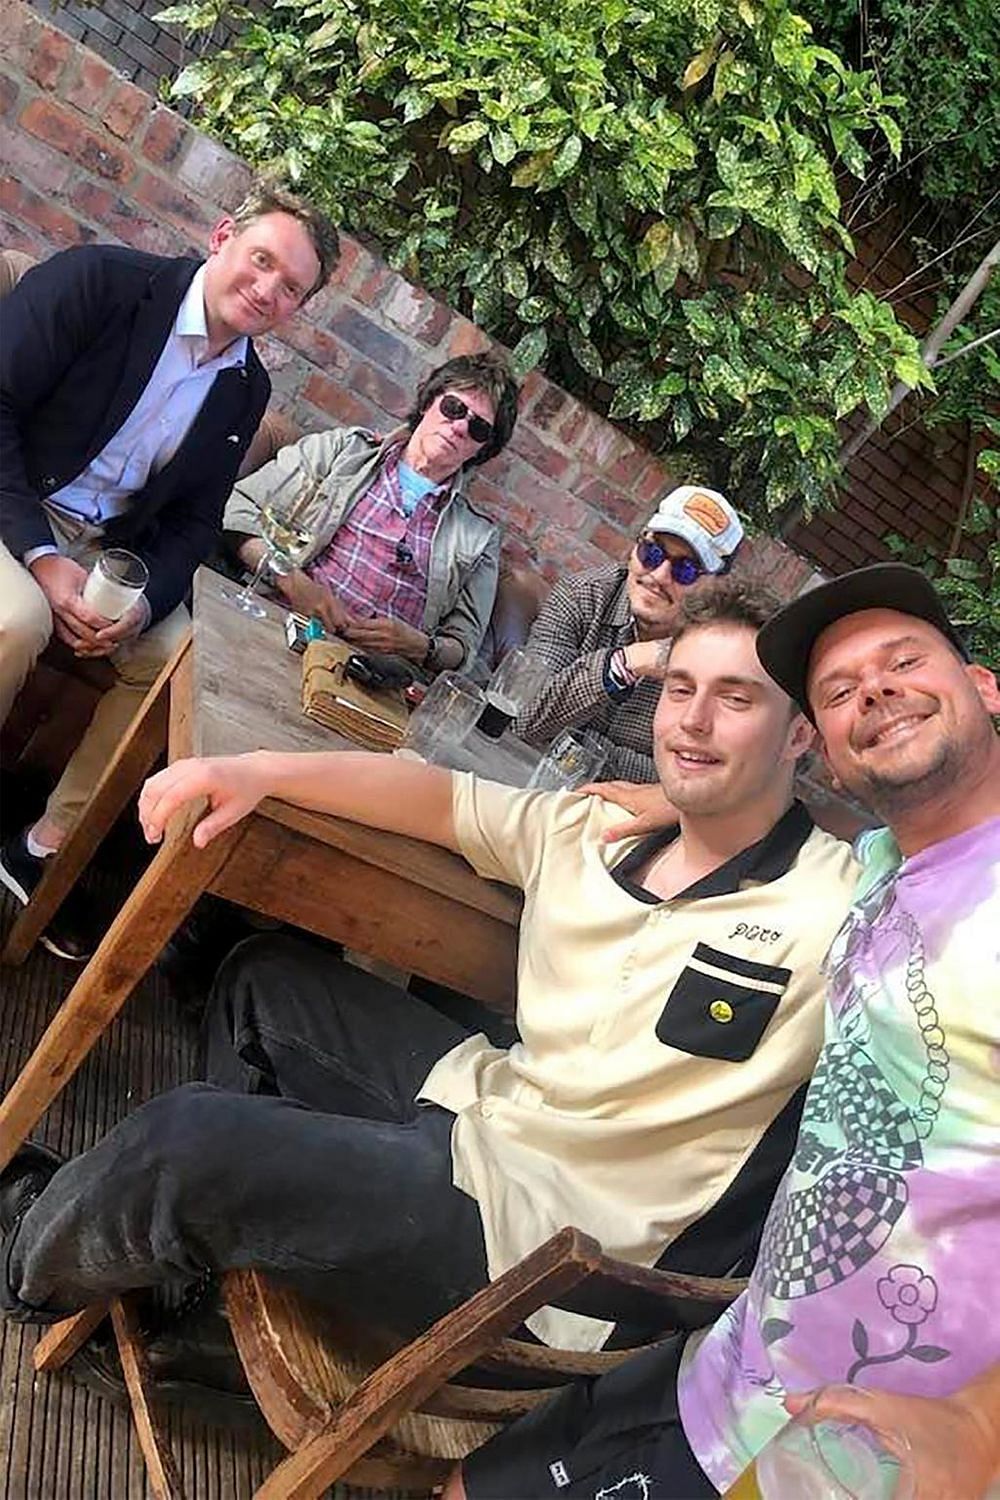 Sam Fender, Johnny Depp, and Jeff Beck at The Bridge Tavern in the UK (Image via samfender/Instagram)